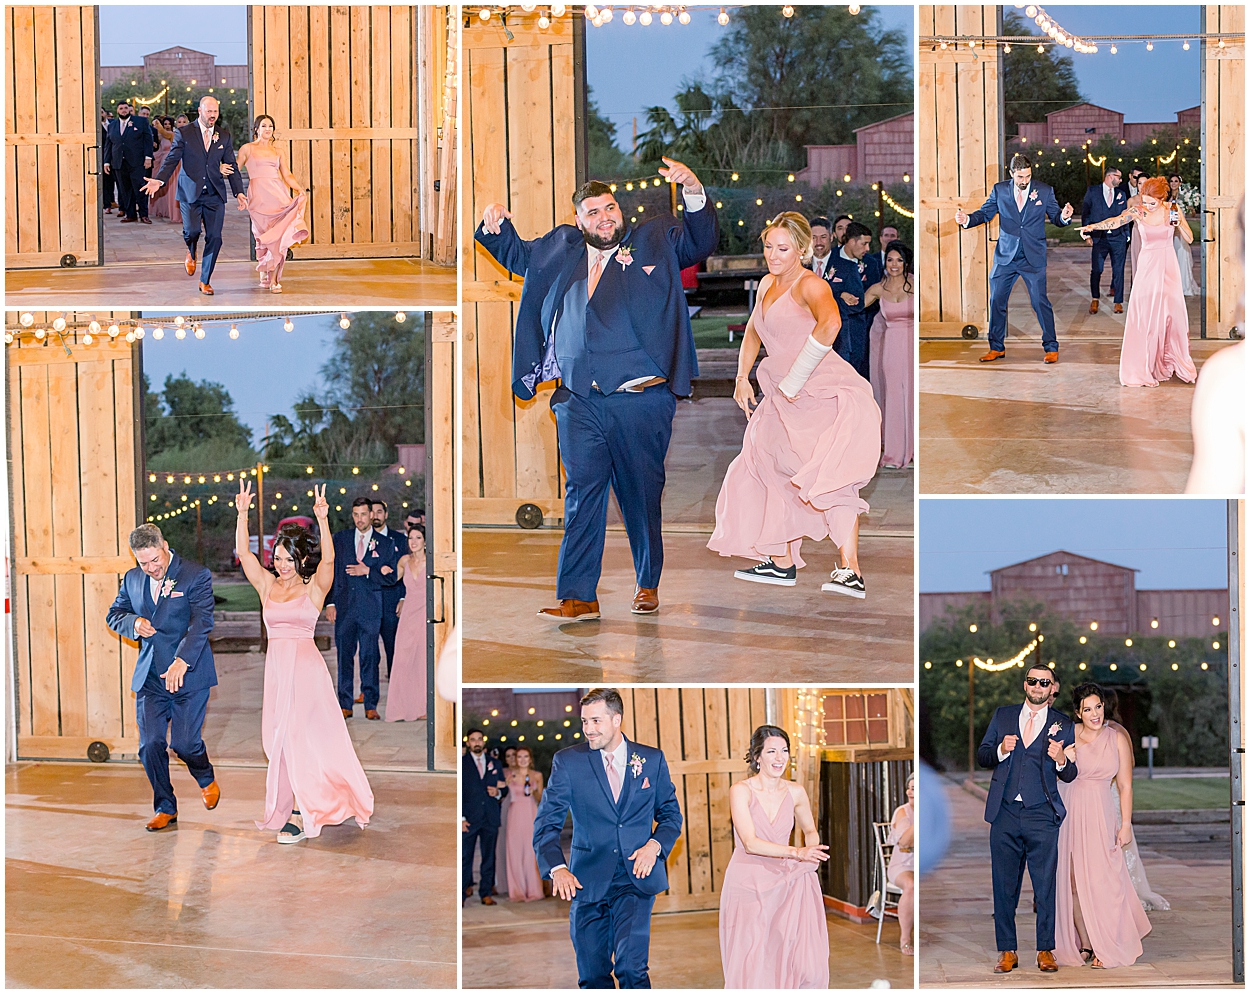 Wedding Party Grand Entrance into Reception, Blush Bridesmaid Dresses, Navy Groomsmen Suits